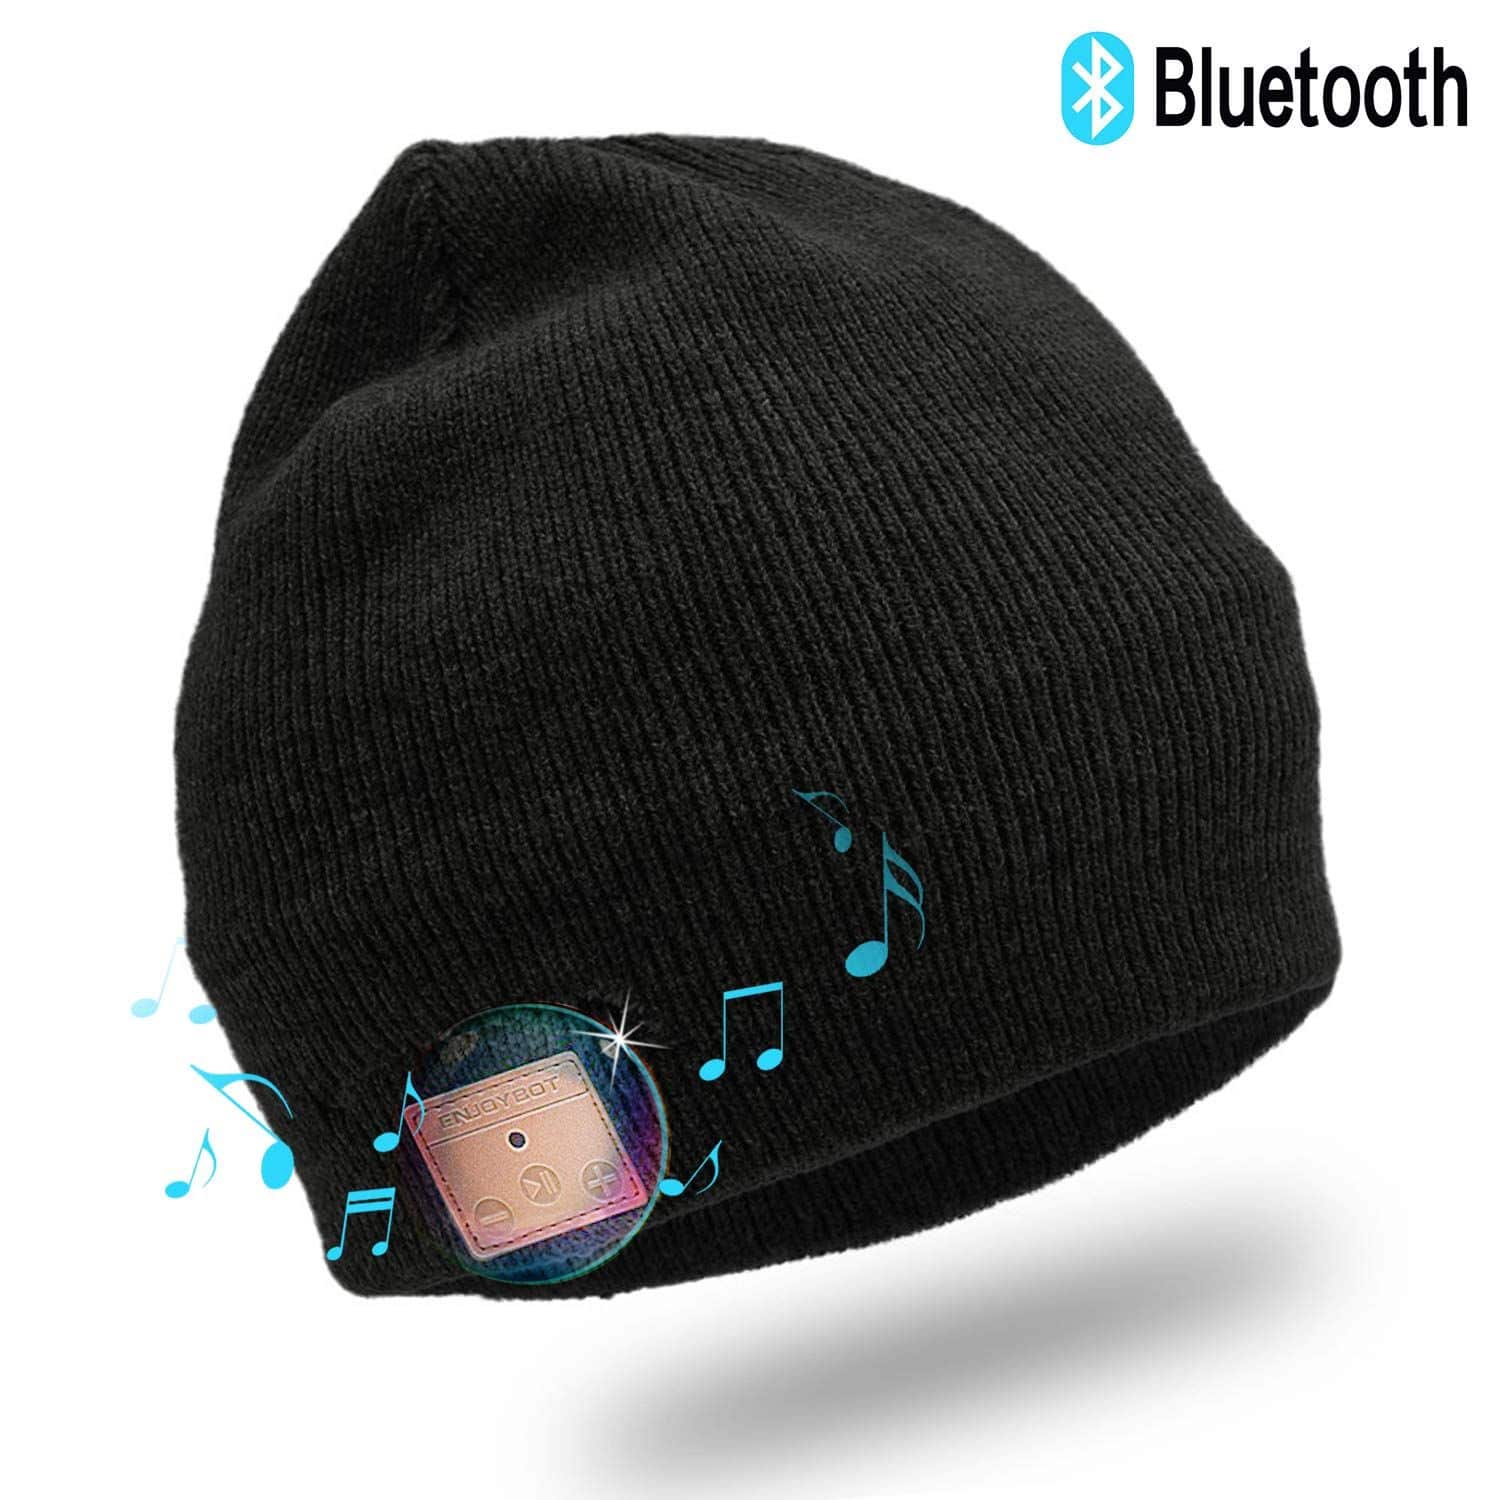 Enjoybot Bluetooth Beanie